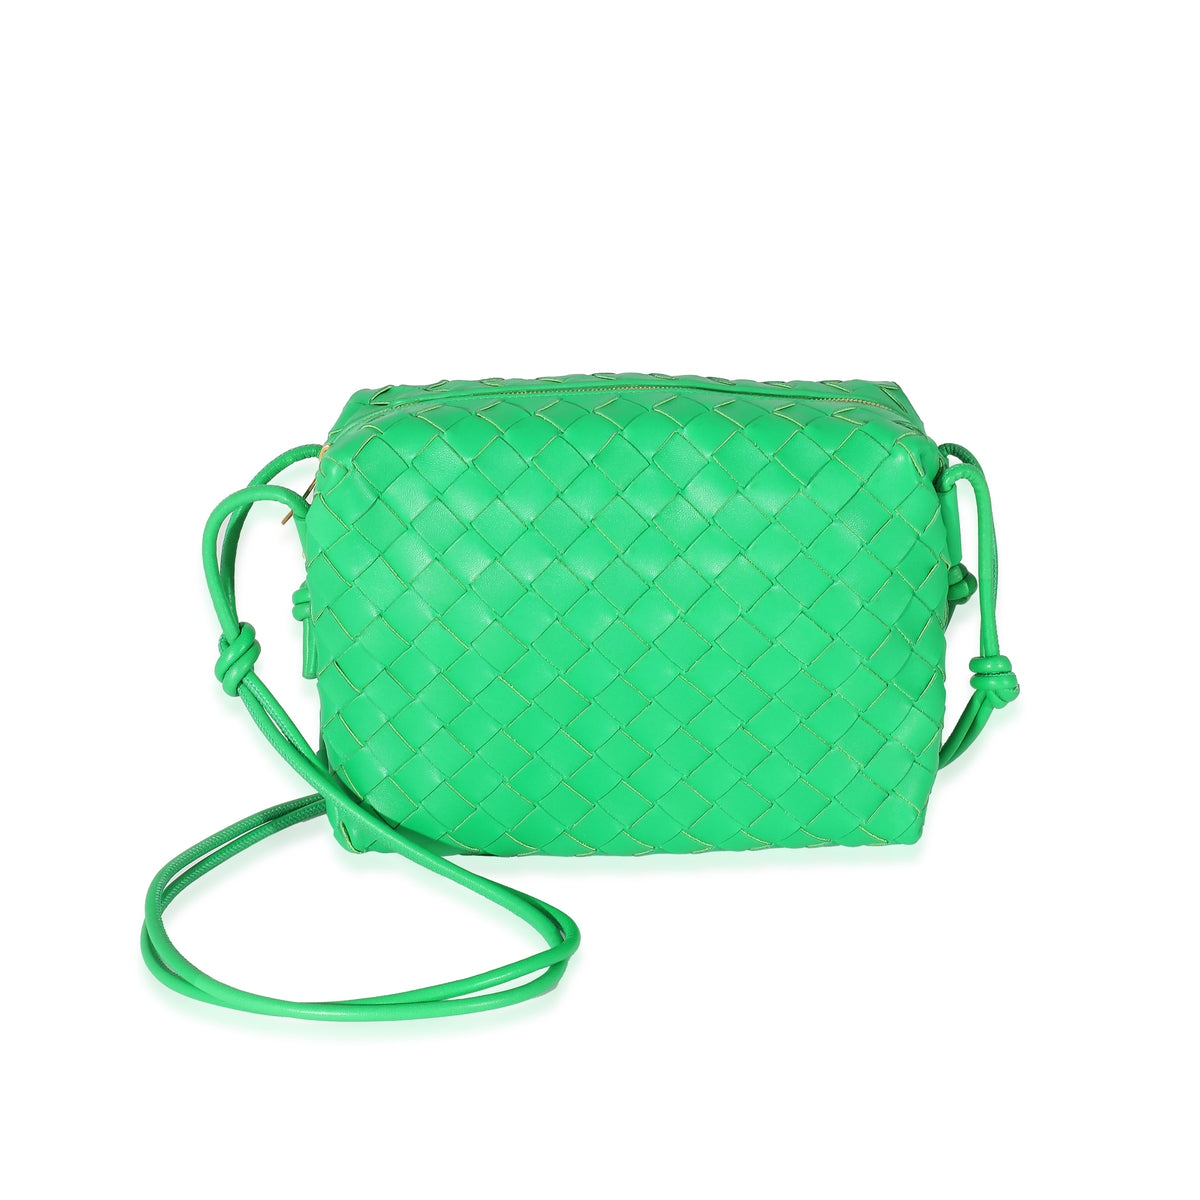 Bottega Veneta® Mini Loop Camera Bag in Parakeet. Shop online now.